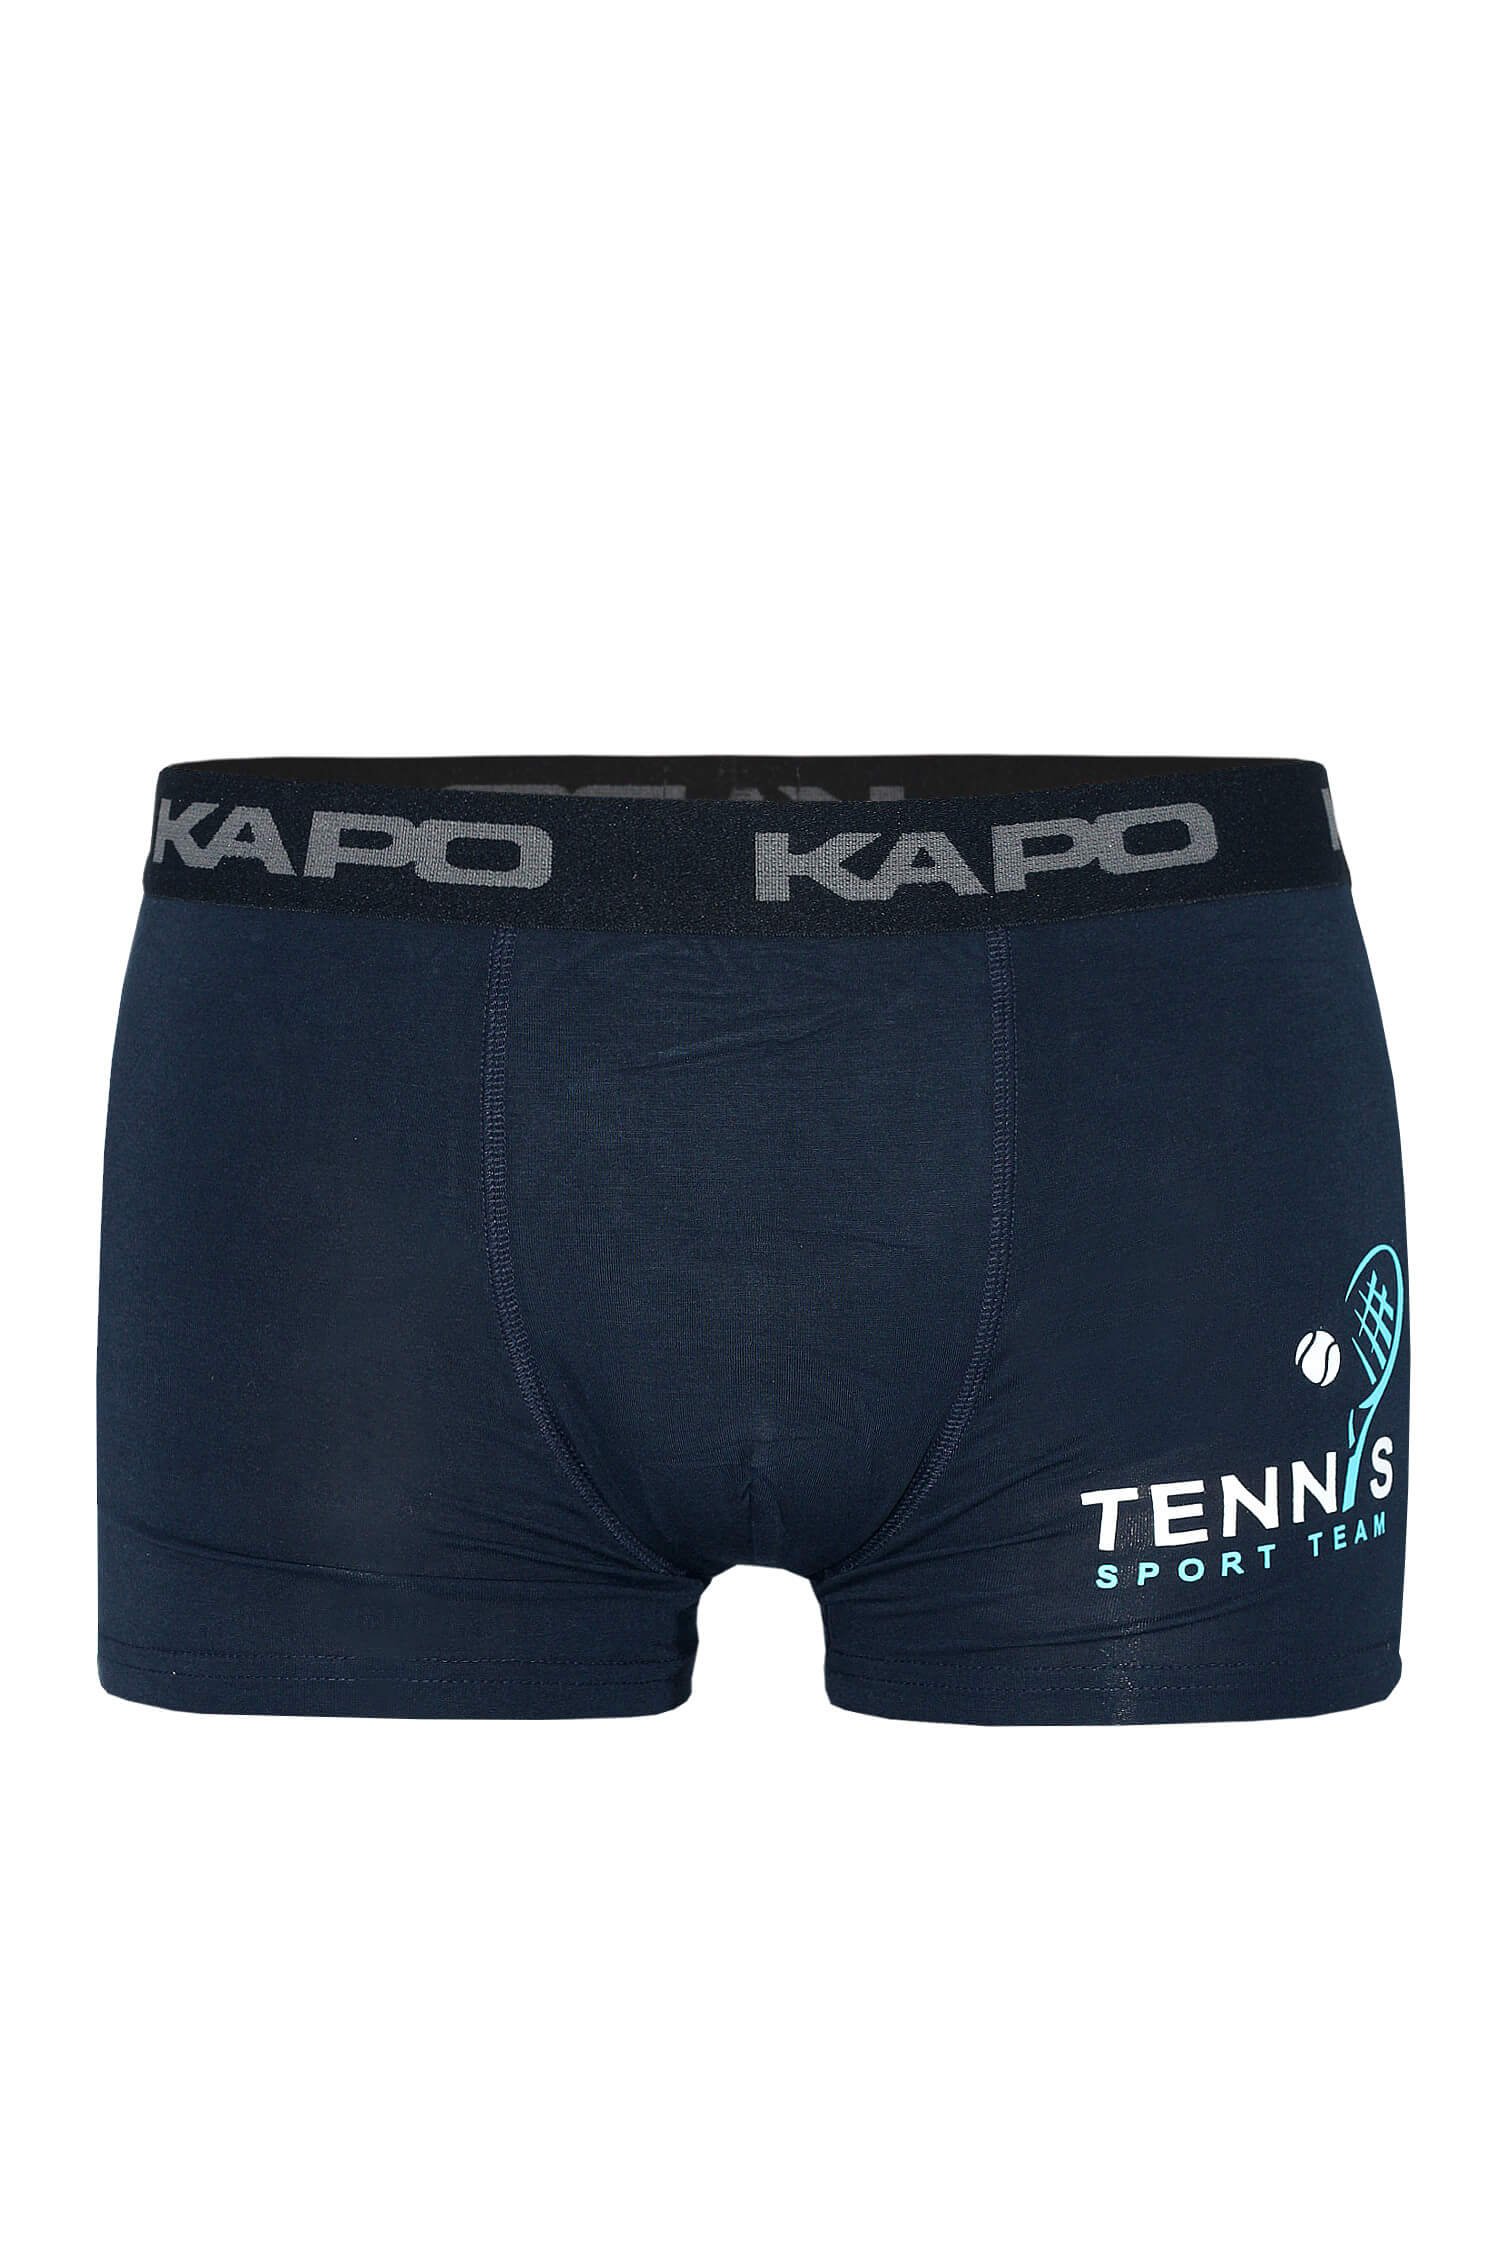 Rafael Kapo tenis boxerky L tmavě modrá